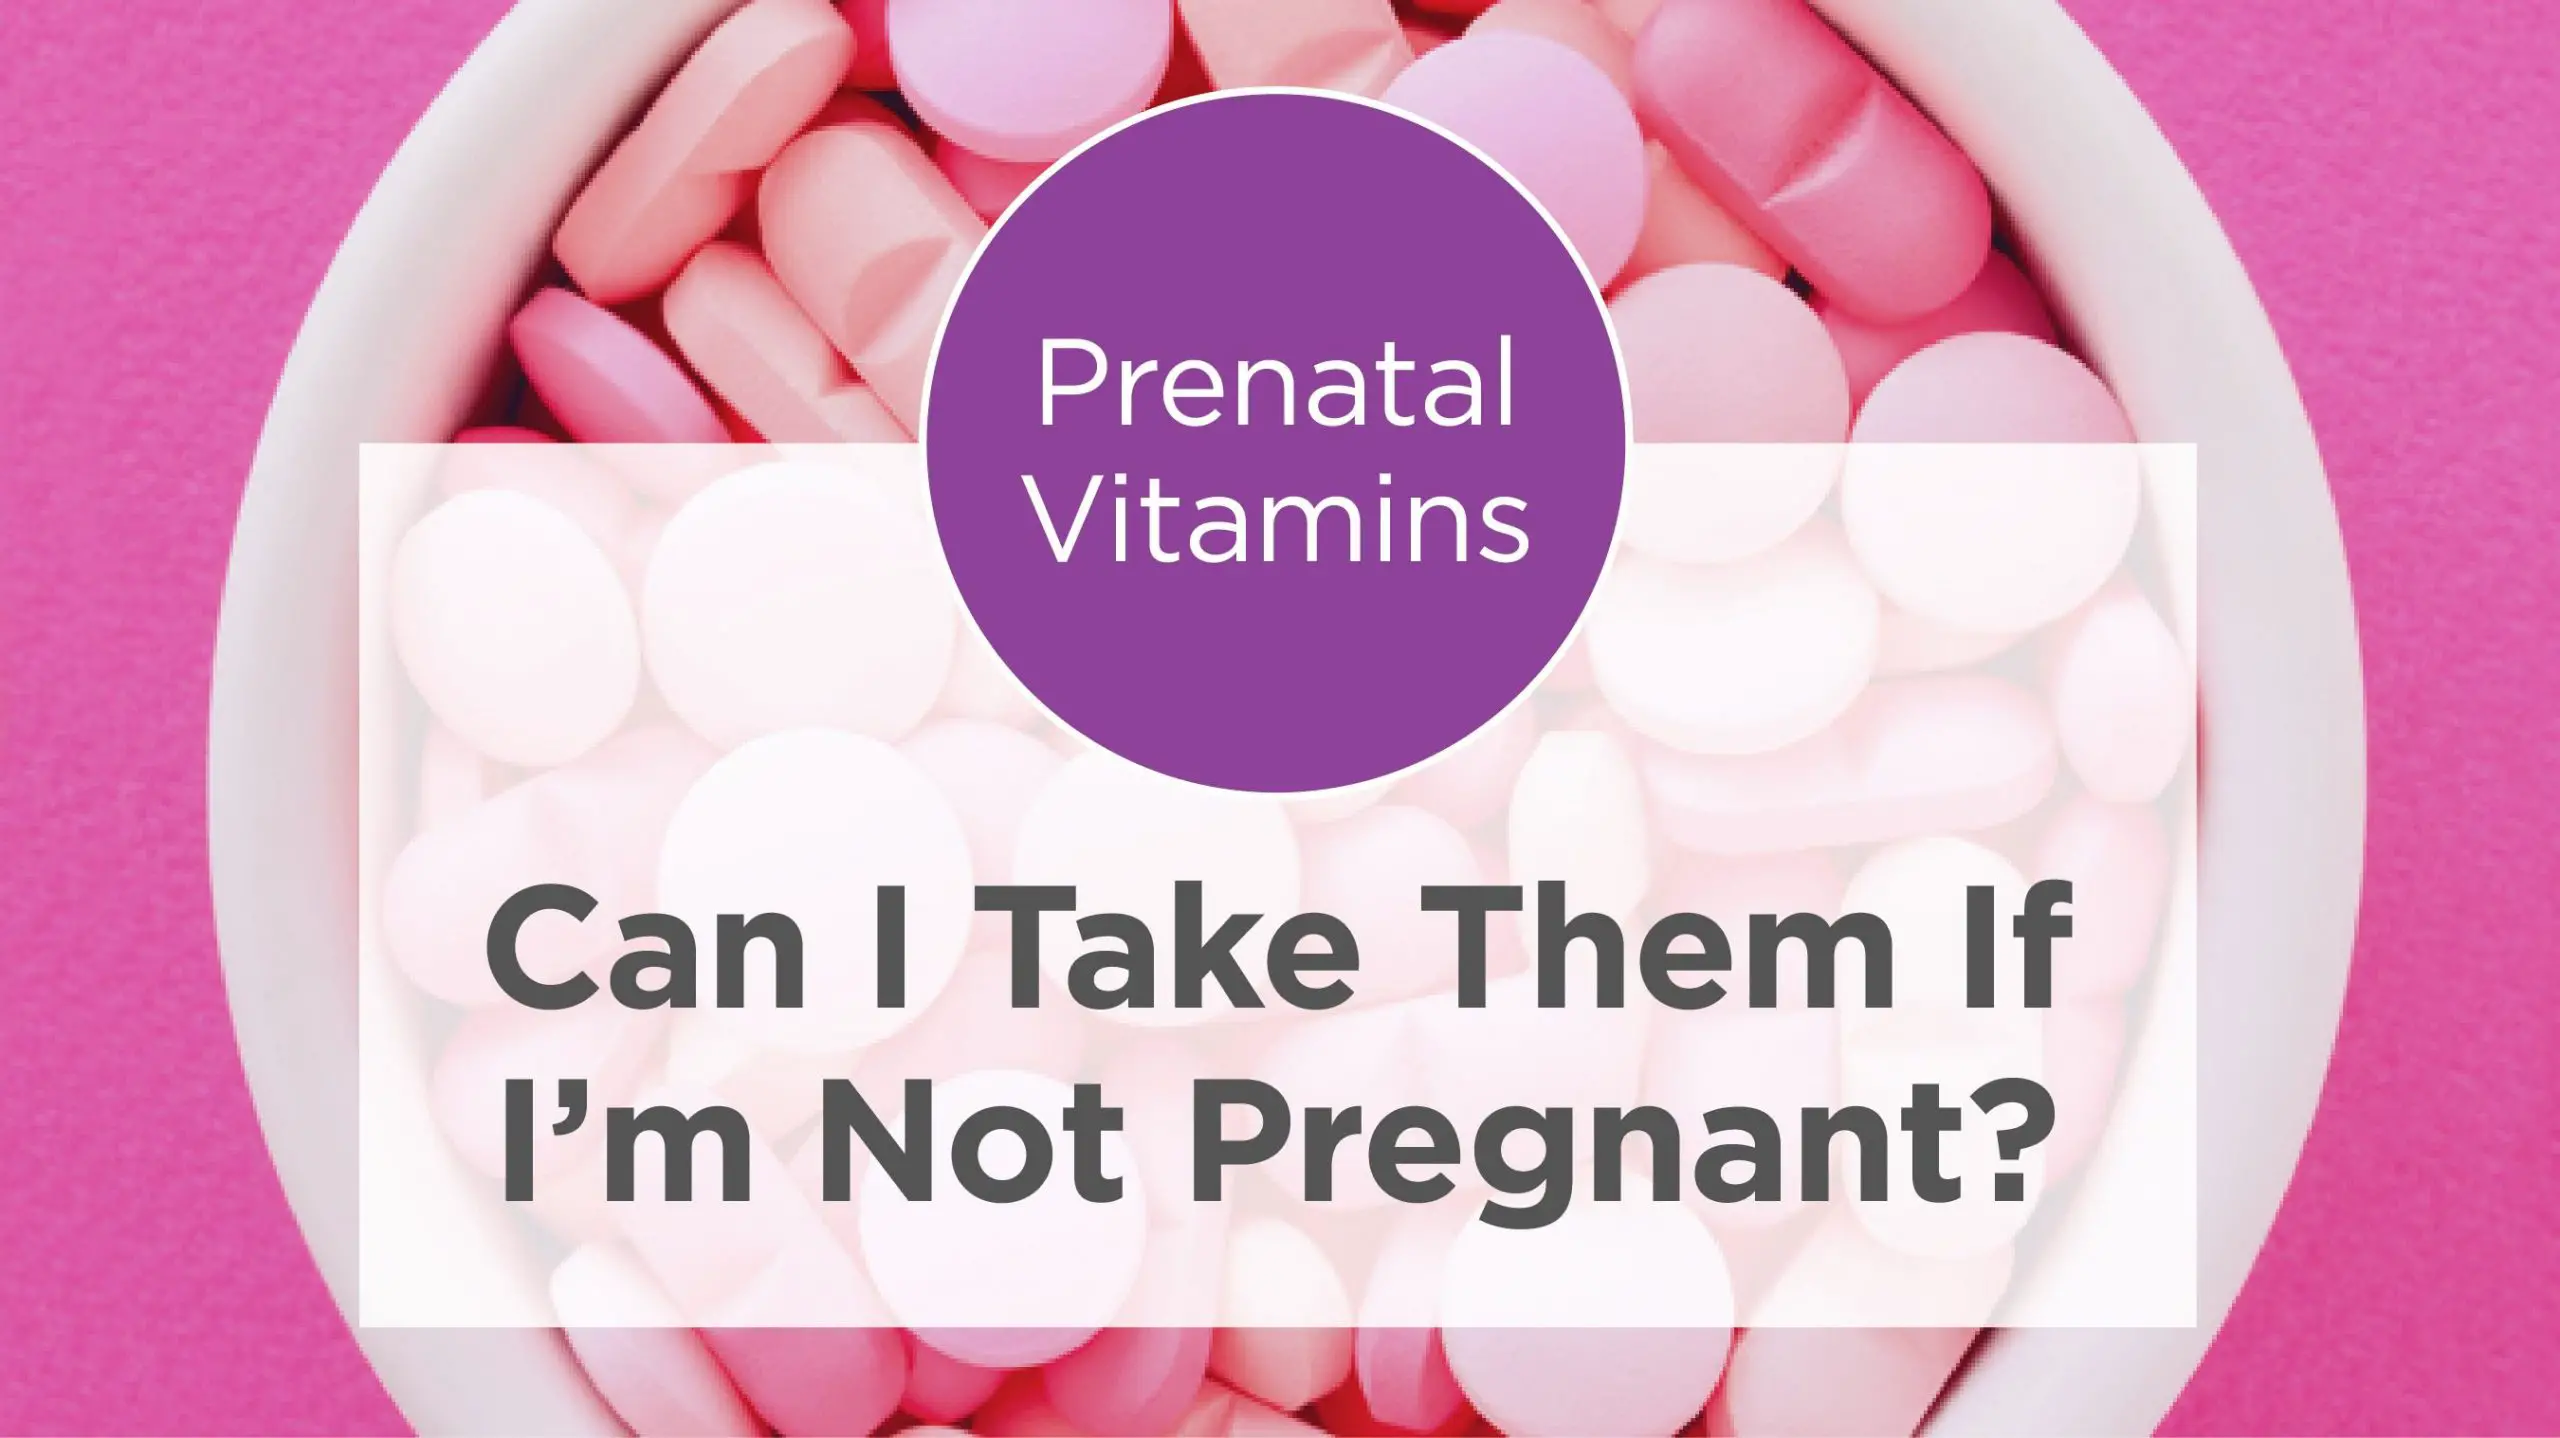 Prenatal Vitamins While Not Pregnant: Can I Take Them ...